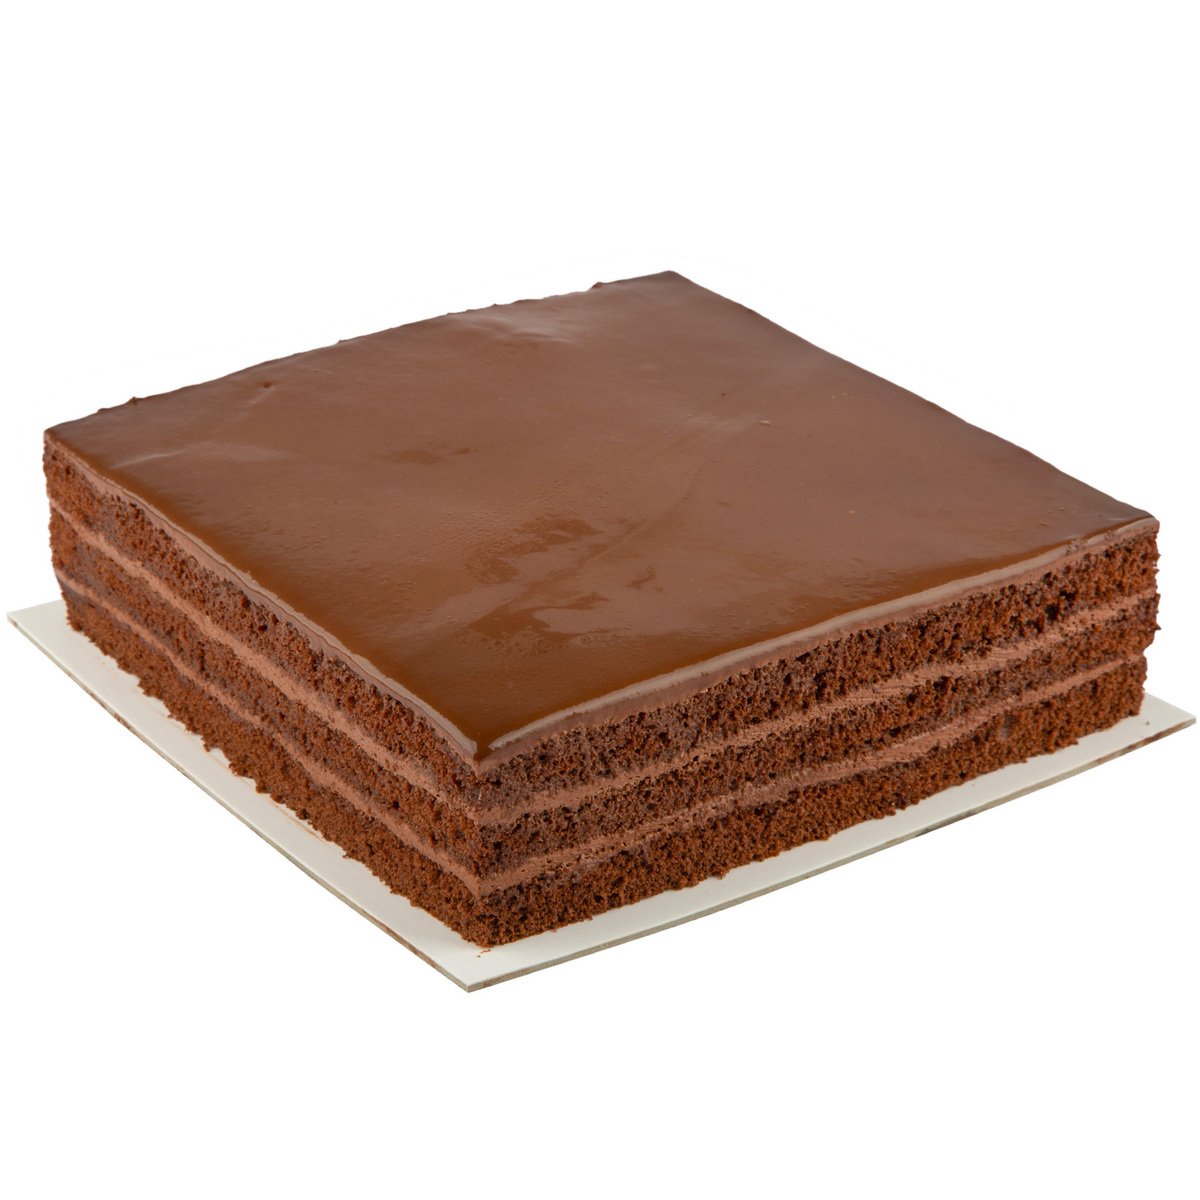 Napolitan Chocolate Cake 800 g